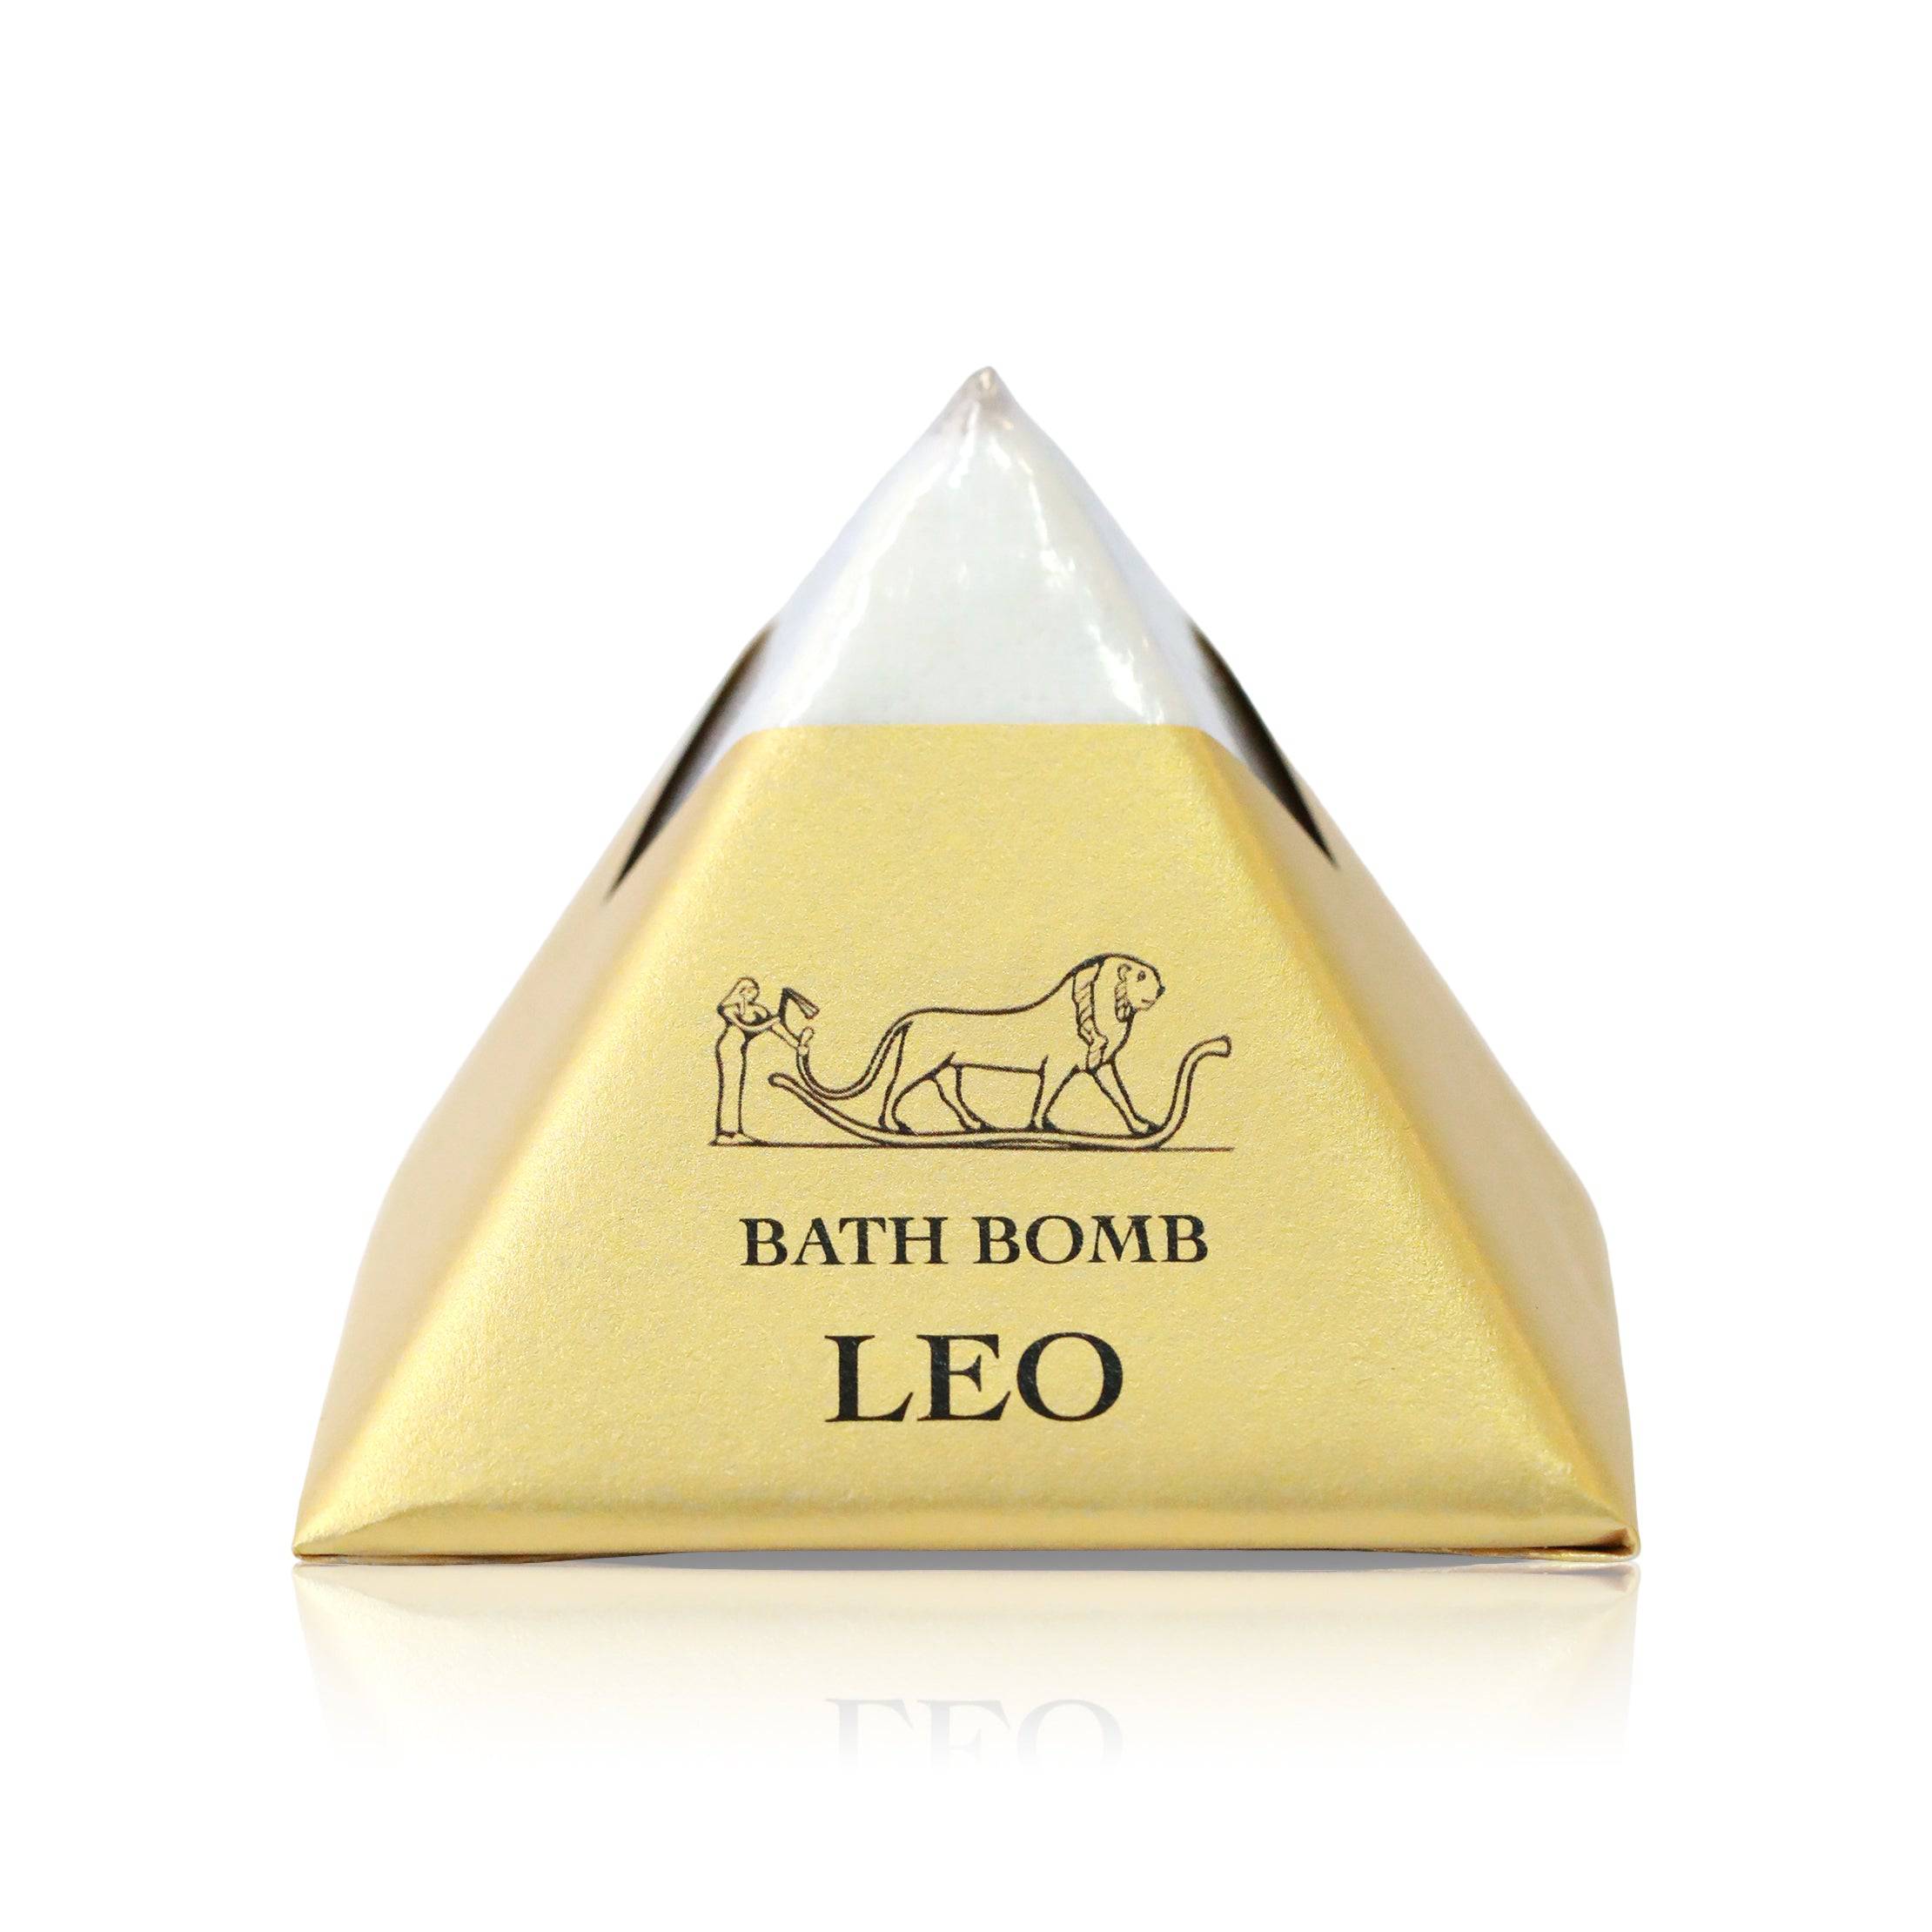 Leo Zodiac Sign Pyramid Bath Bomb - The Gilded Witch